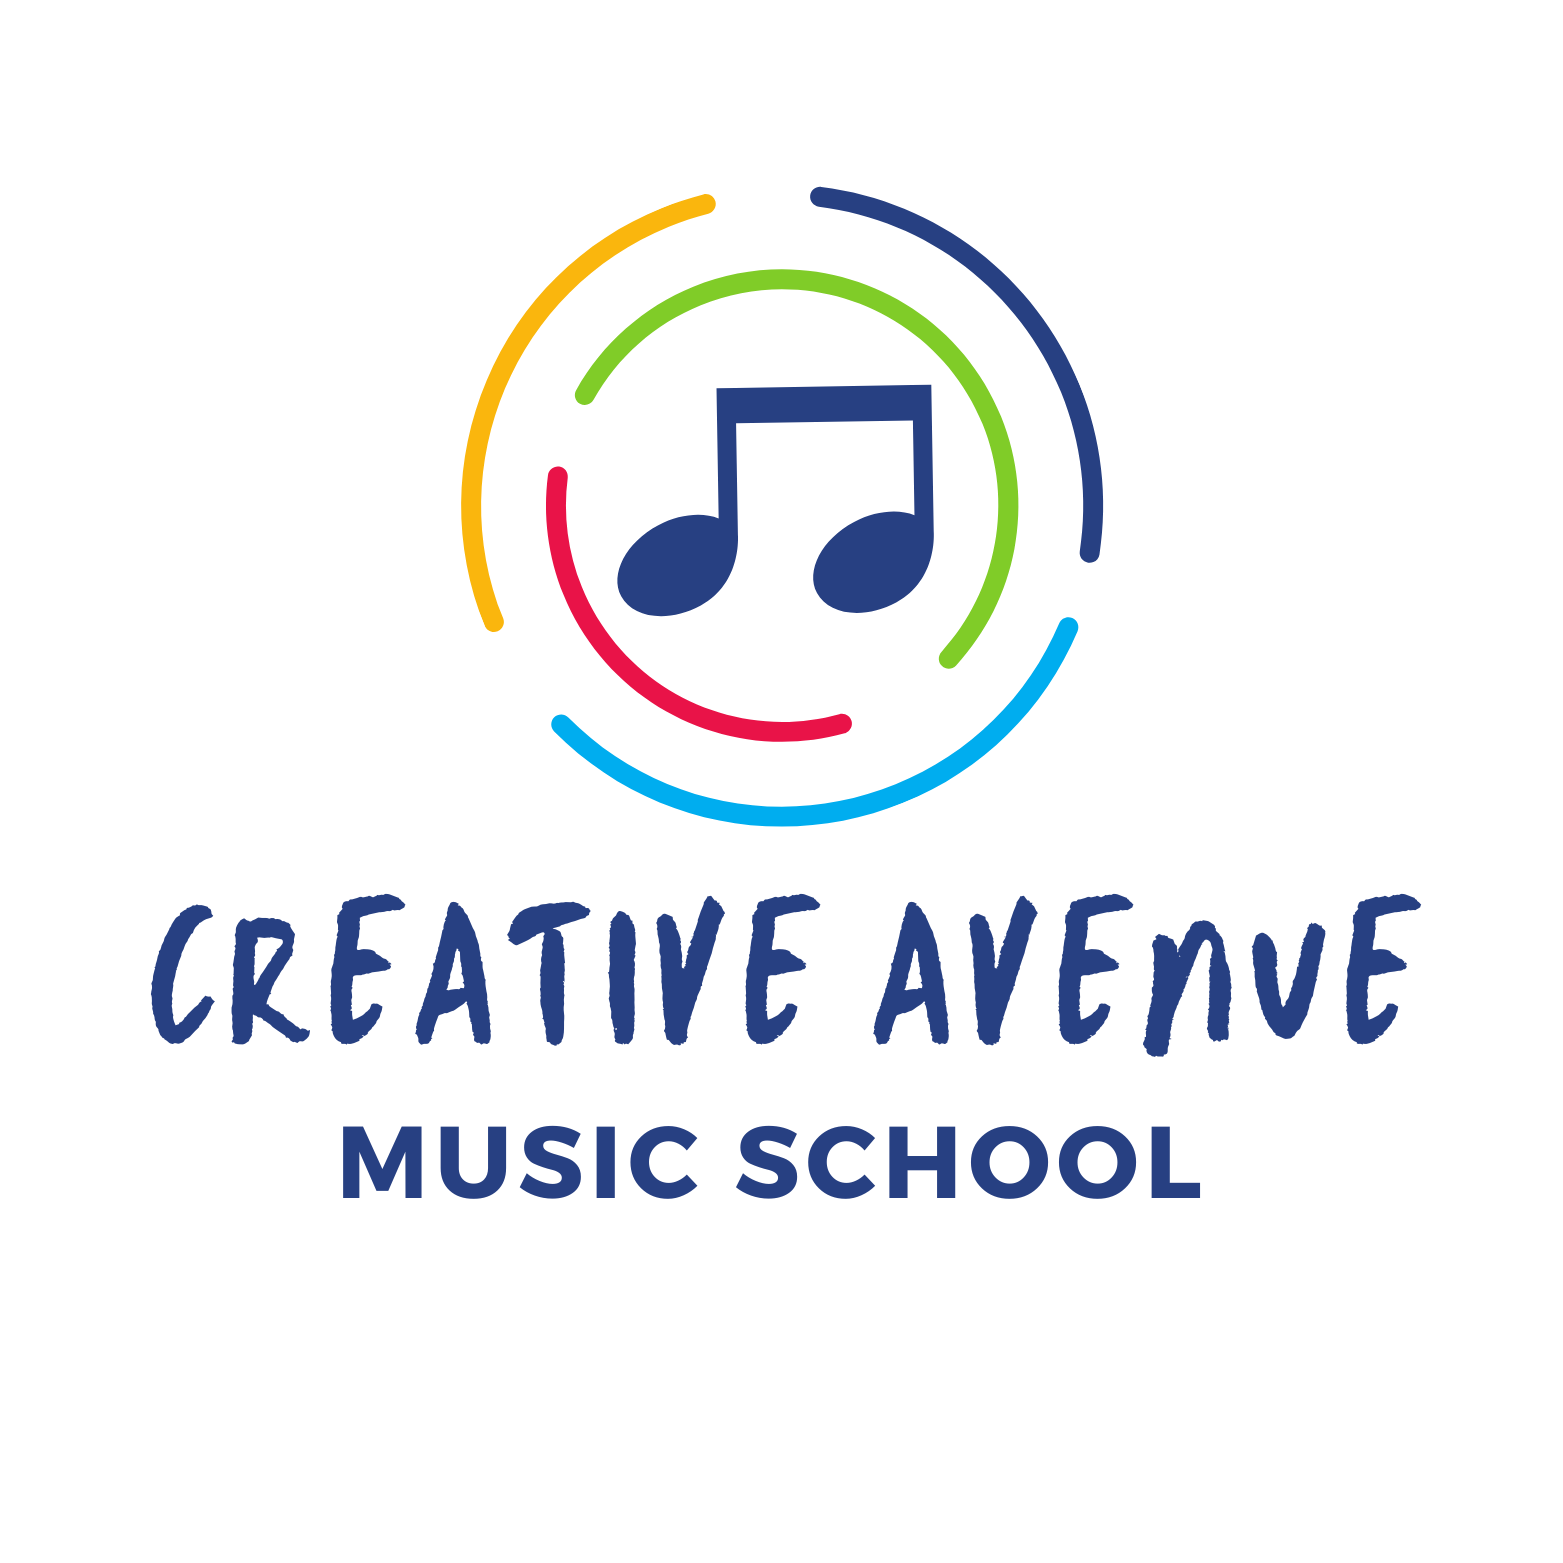 Creative Avenue Music School logo